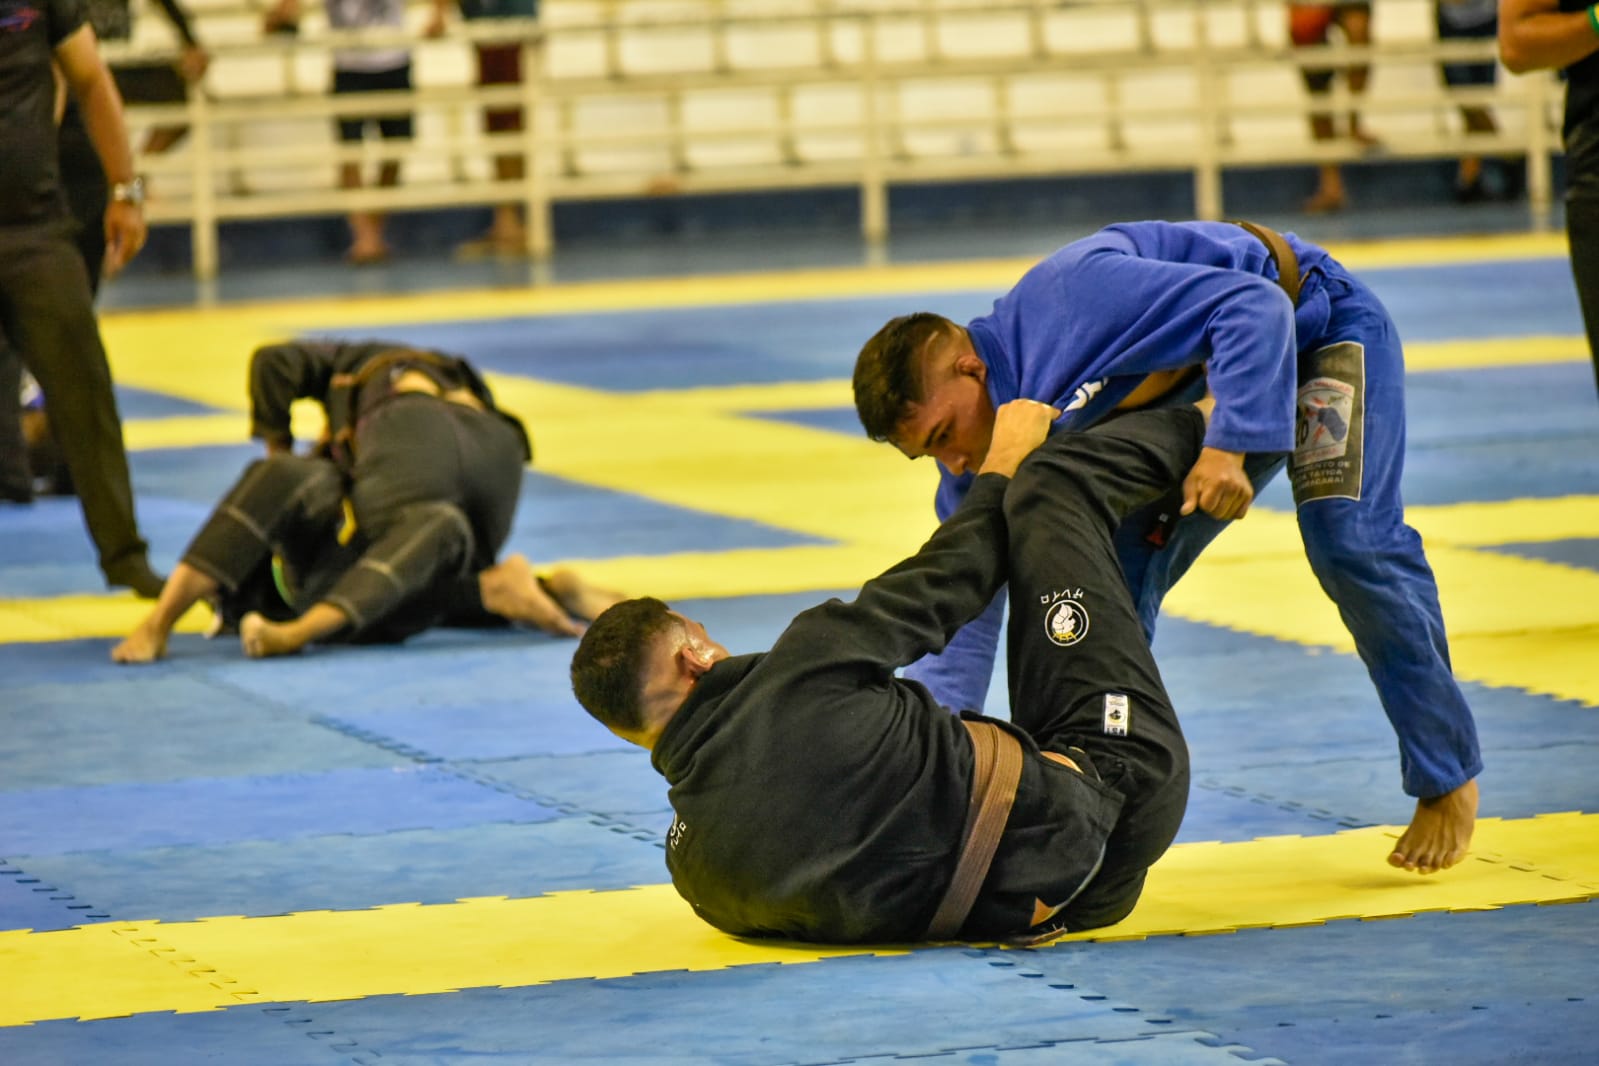 Campeonato de jiu-jitsu terá disputas nas categorias mirim, infantil, juvenil, adultos e máster - Foto: Mauro Neto/Faar